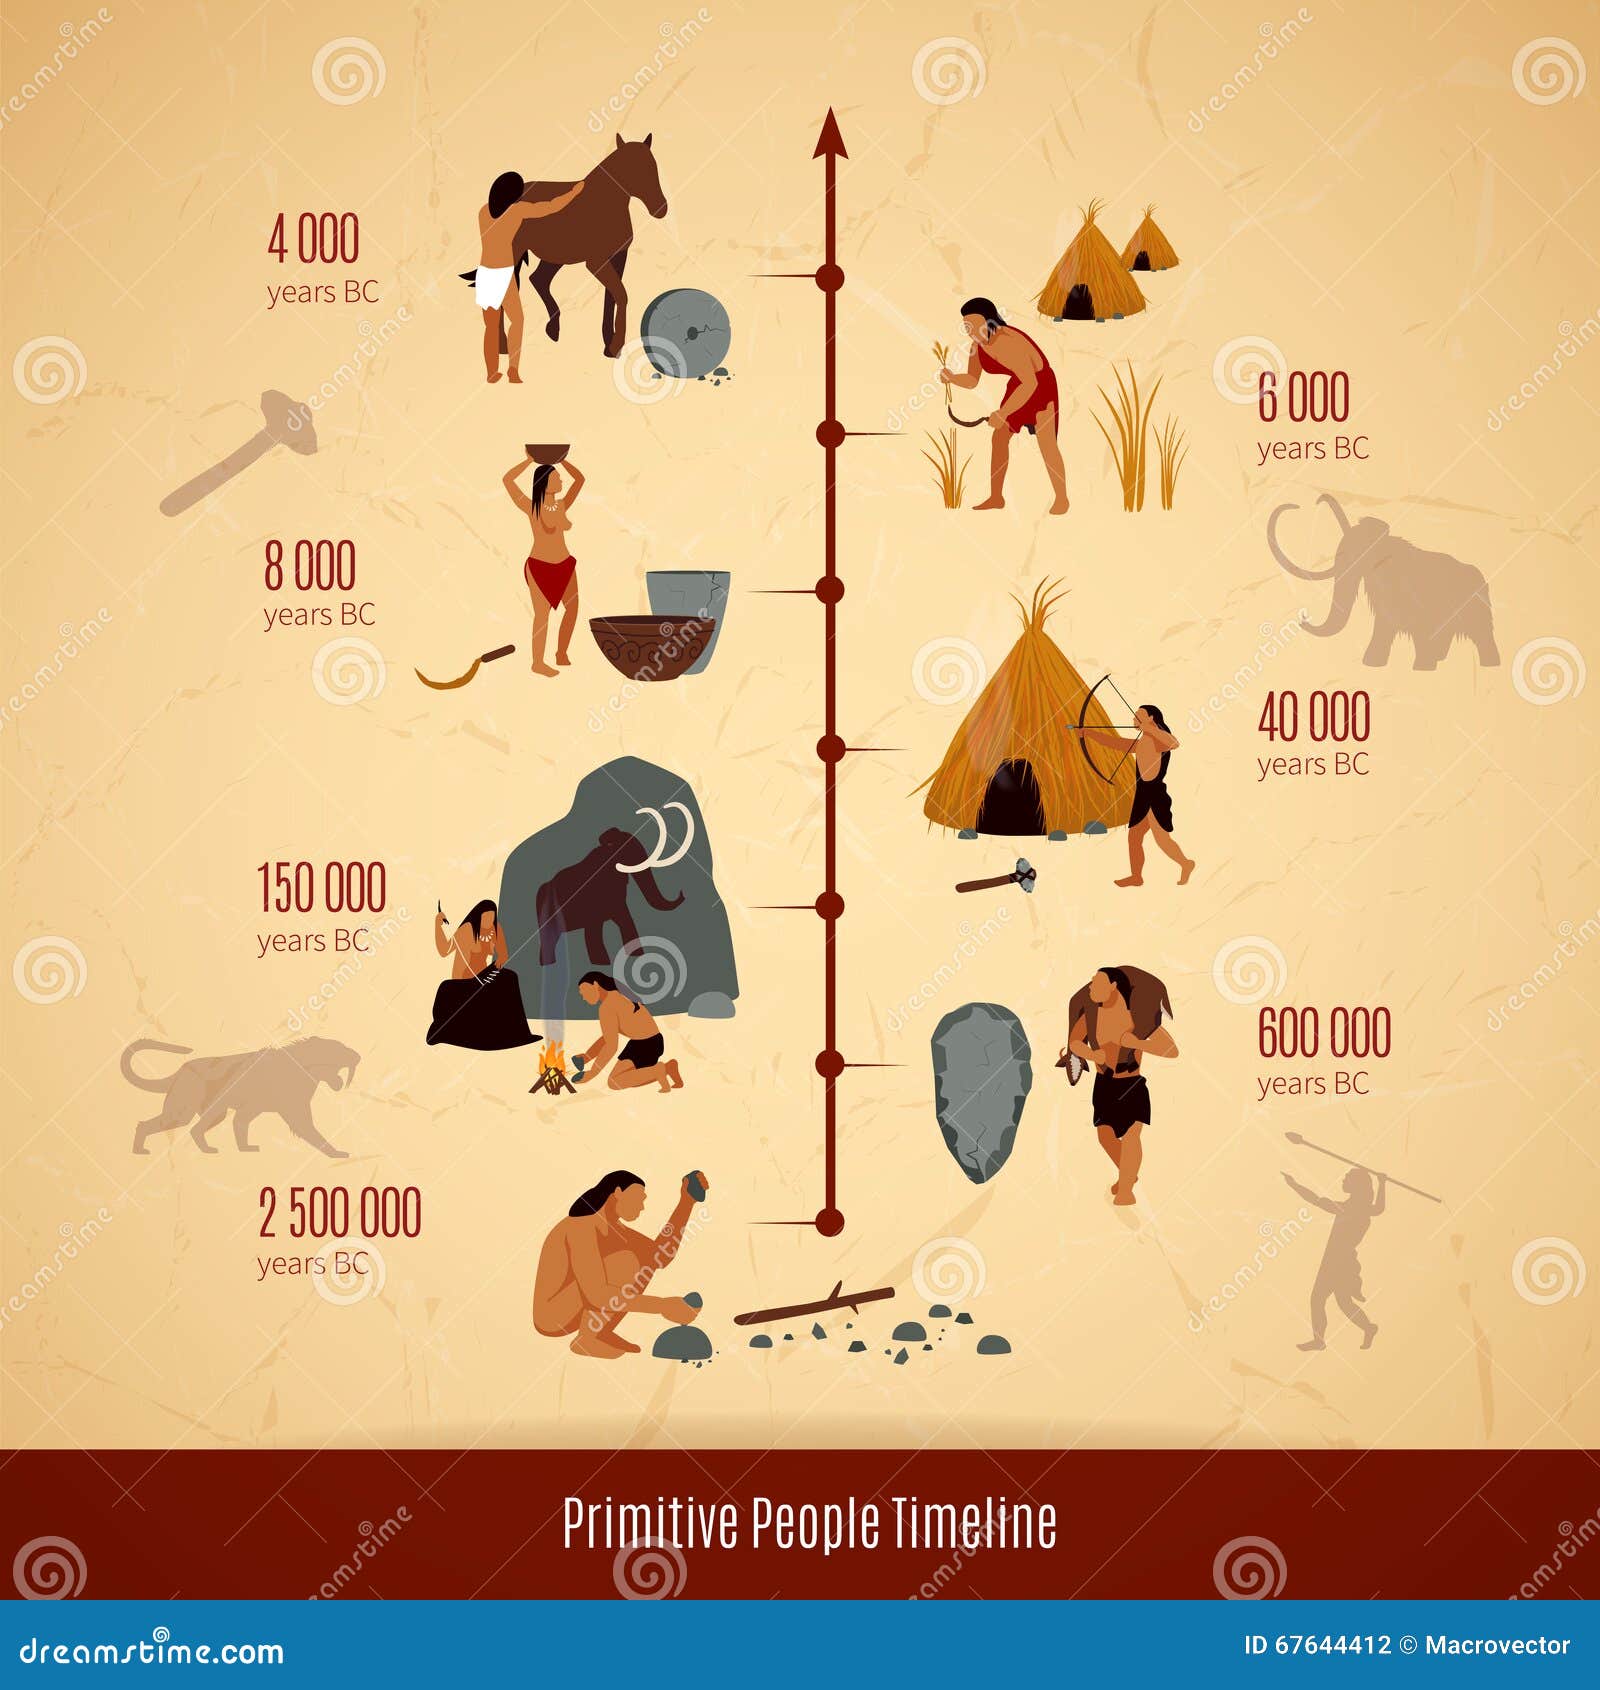 Prehistoric History Timeline